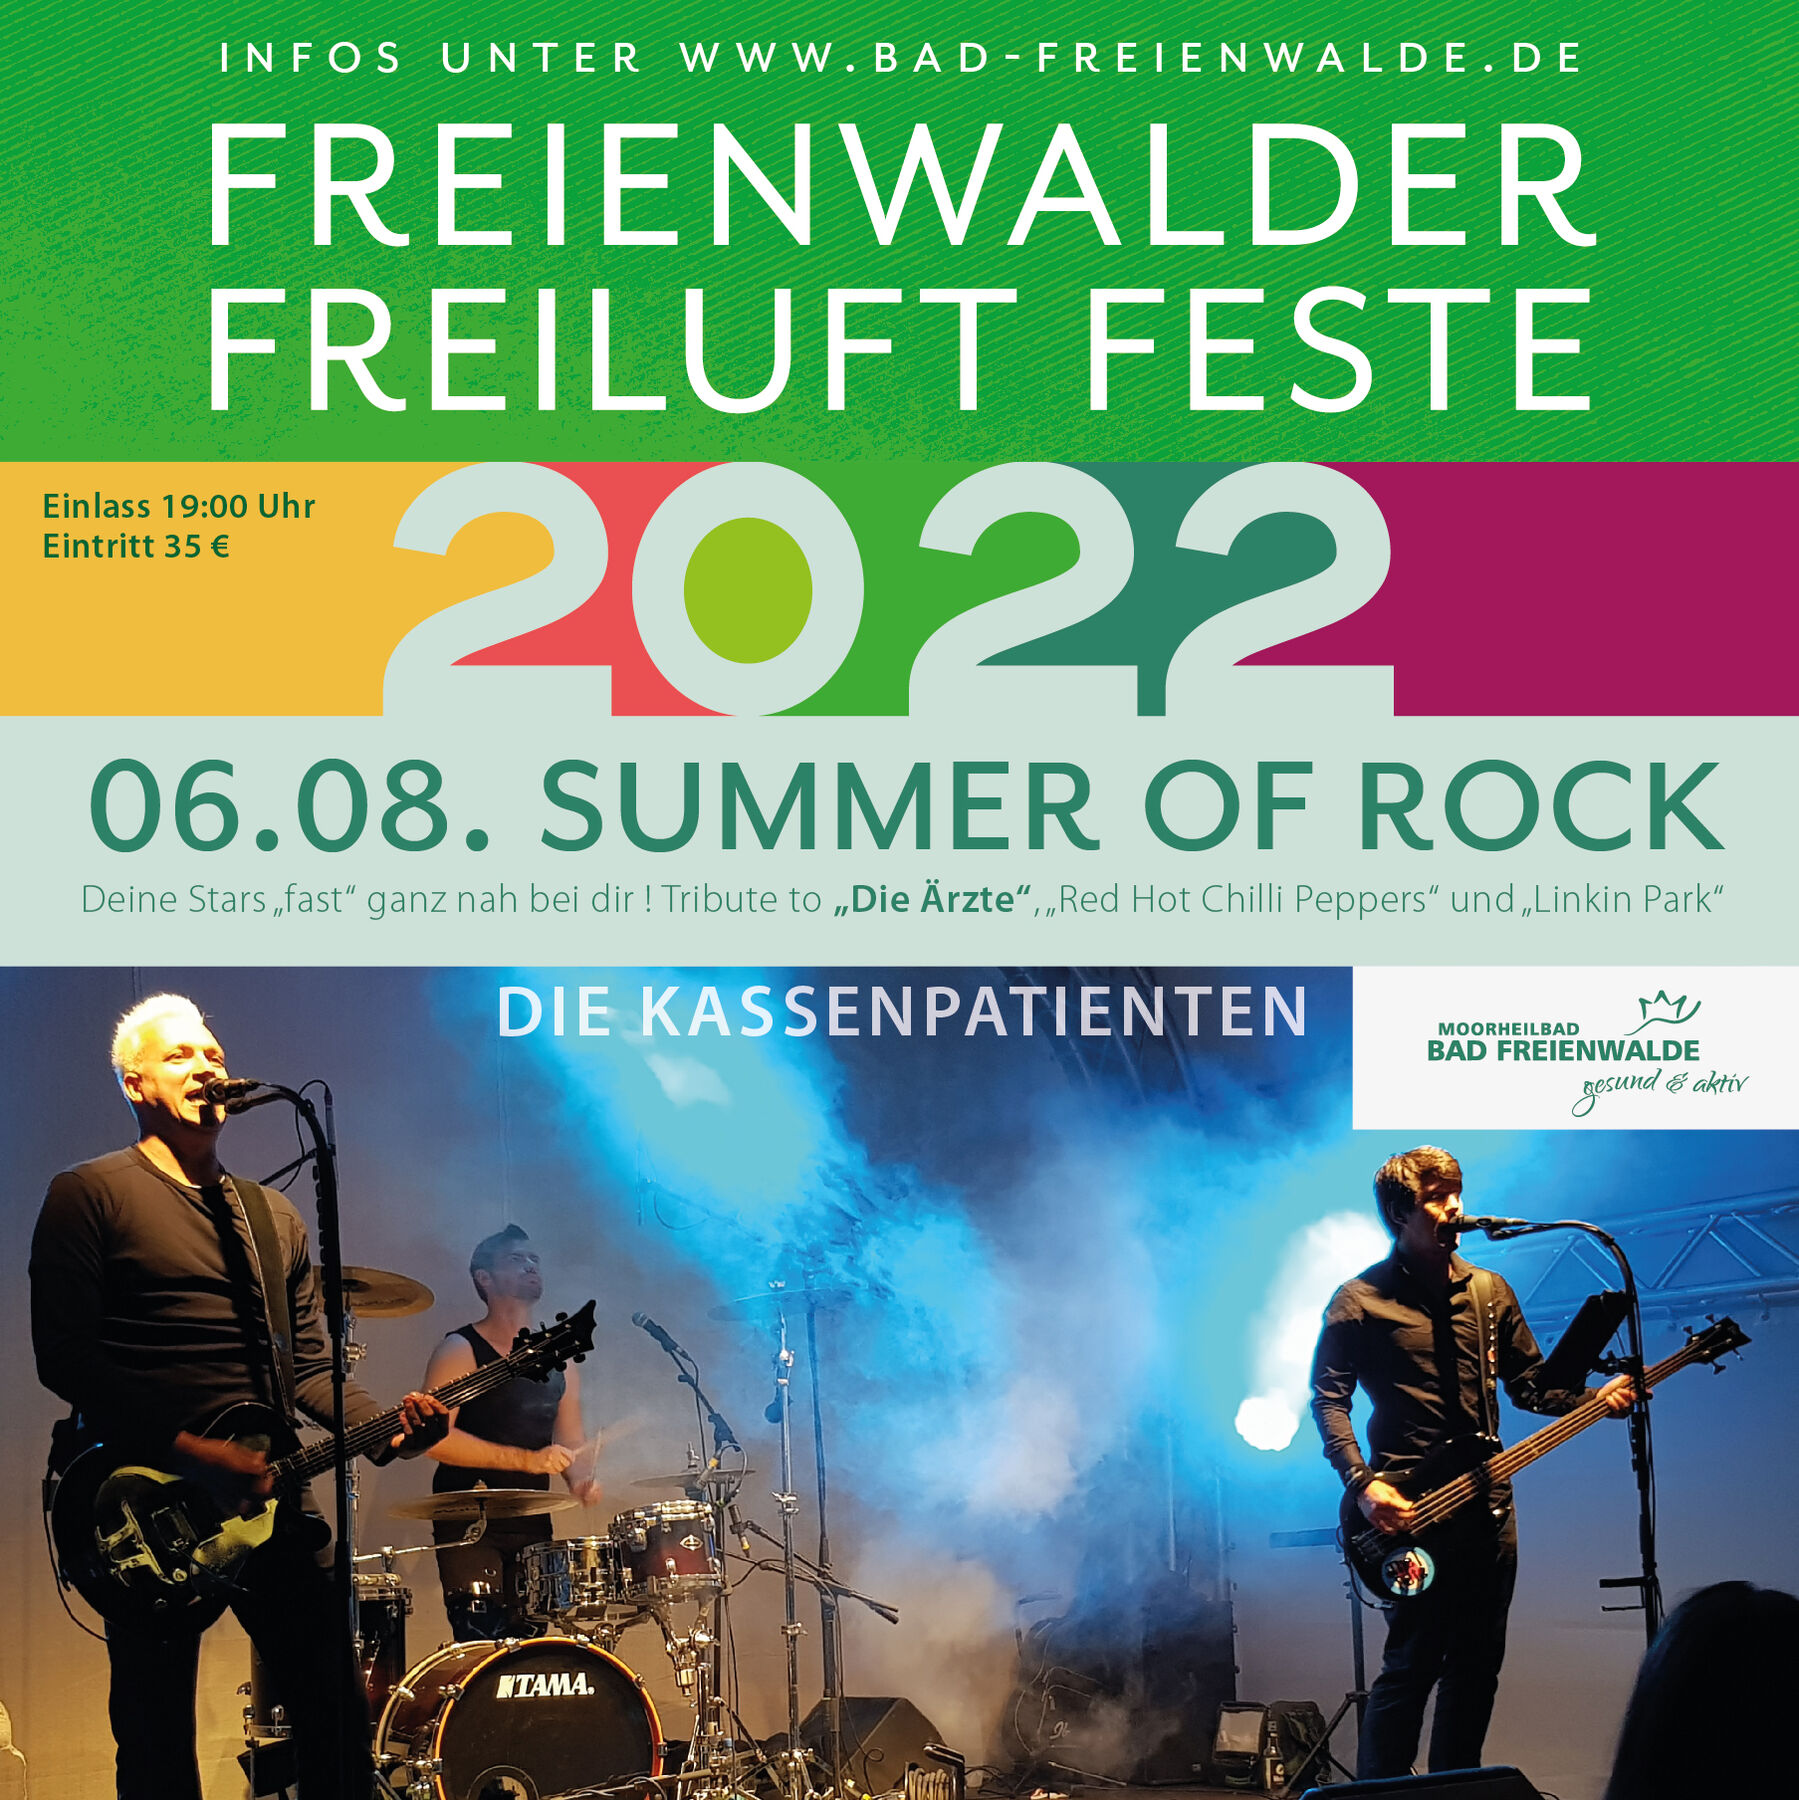 Summer of rock, Foto: Bad Freienwalde Tourismus GmbH, Lizenz: Bad Freienwalde Tourismus GmbH